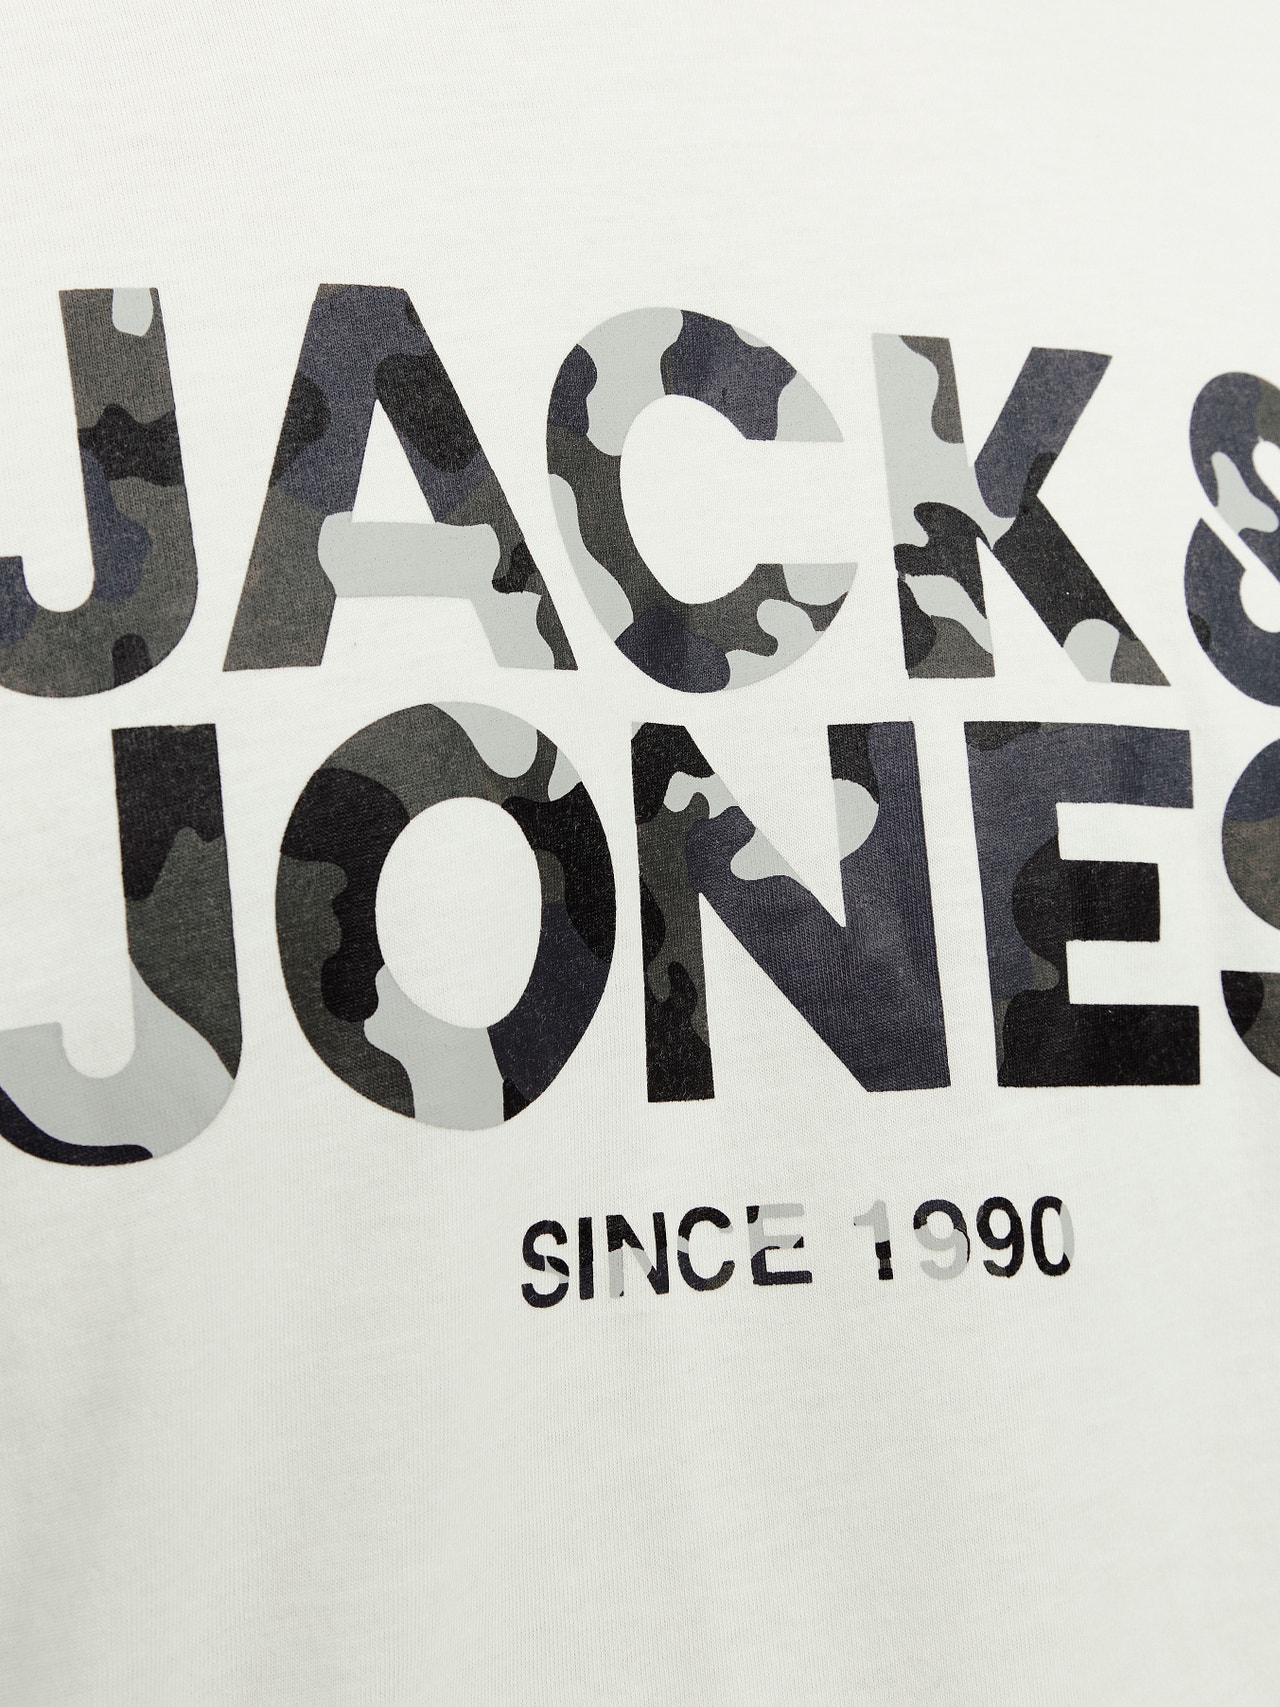 Jack & Jones T-shirt Logo Decote Redondo -Cloud Dancer - 12266155